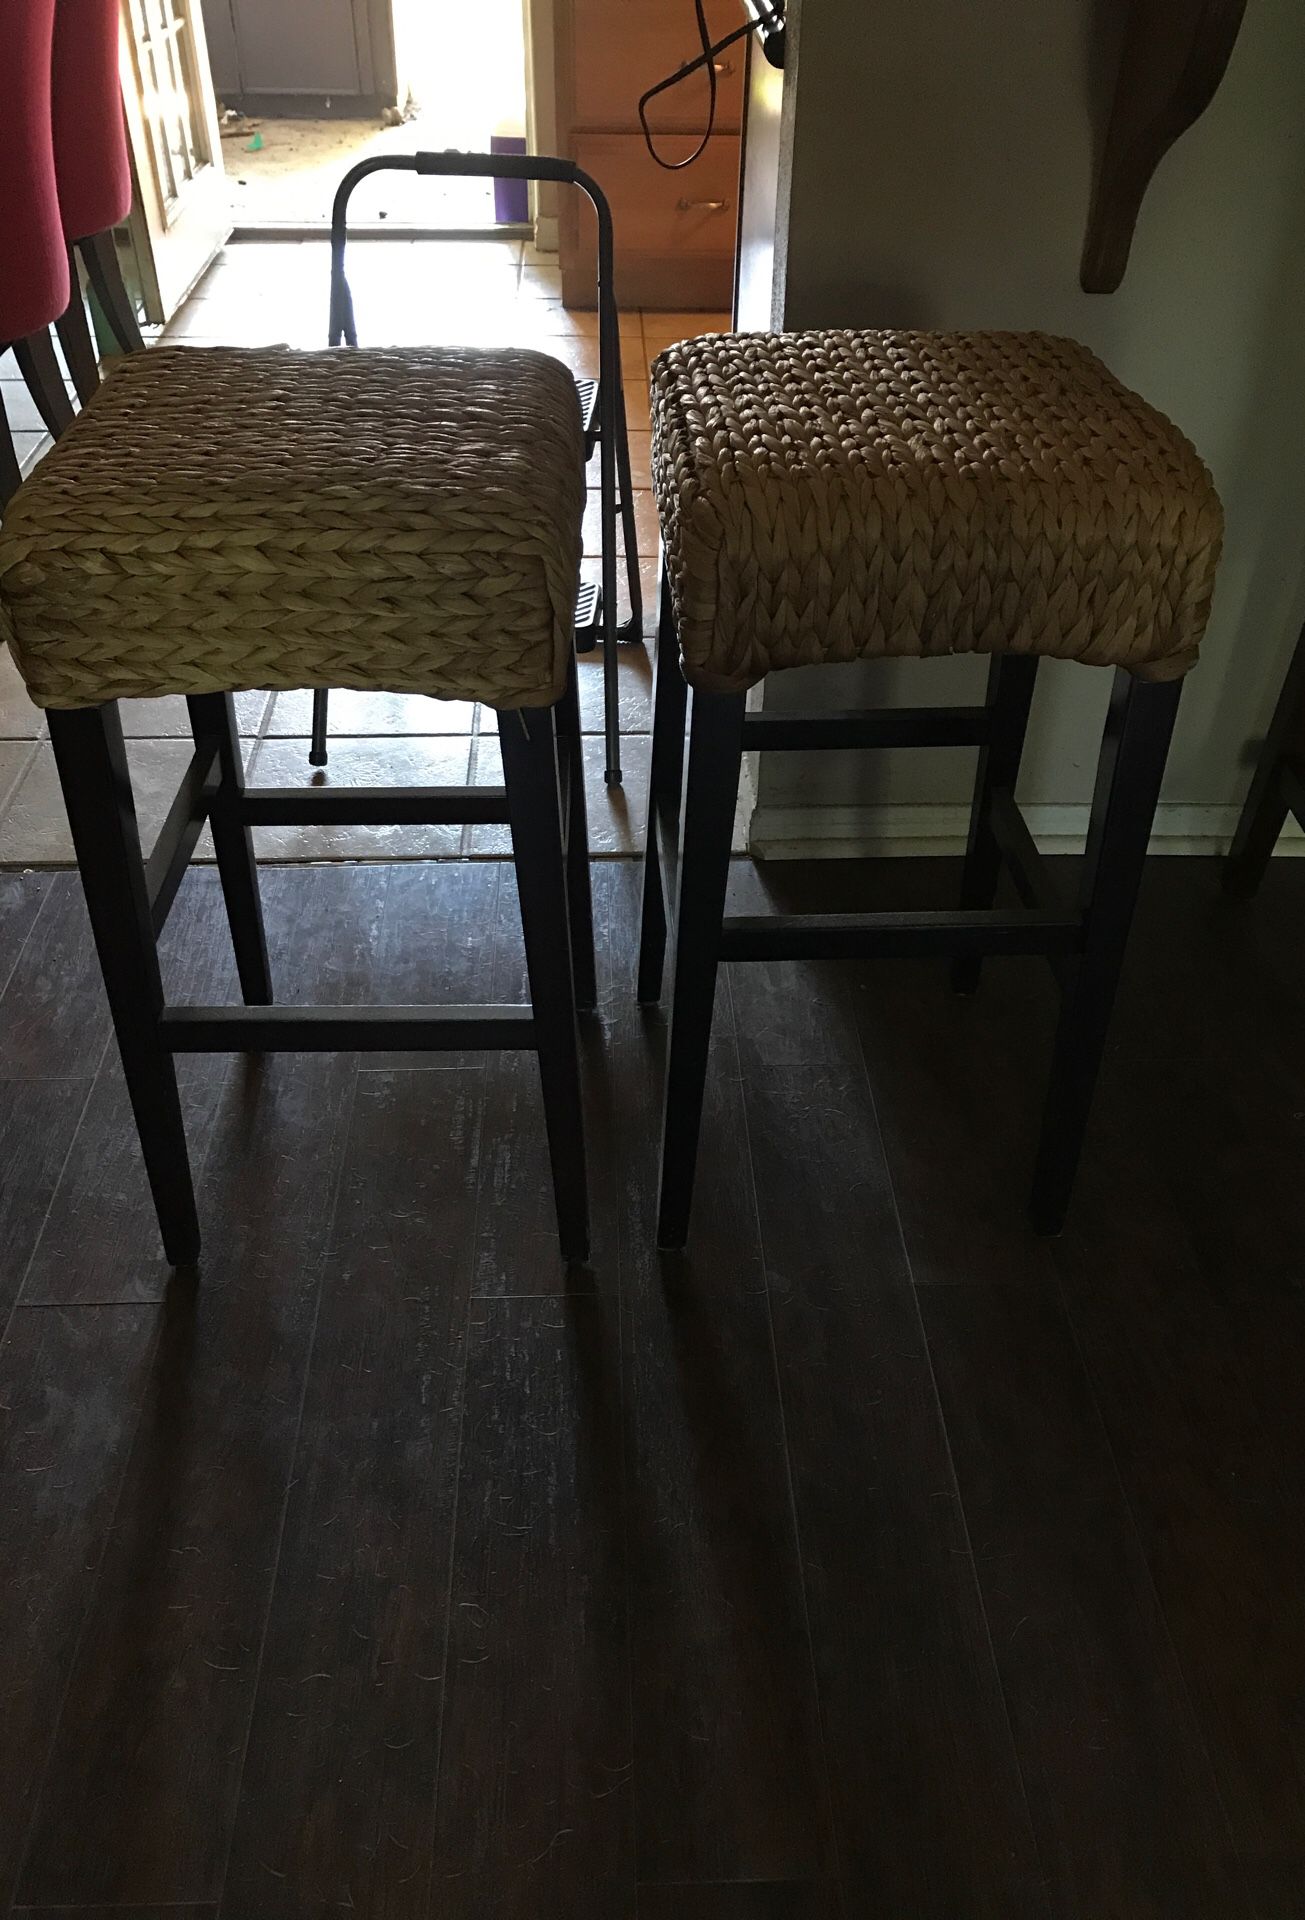 Wicker bar stools